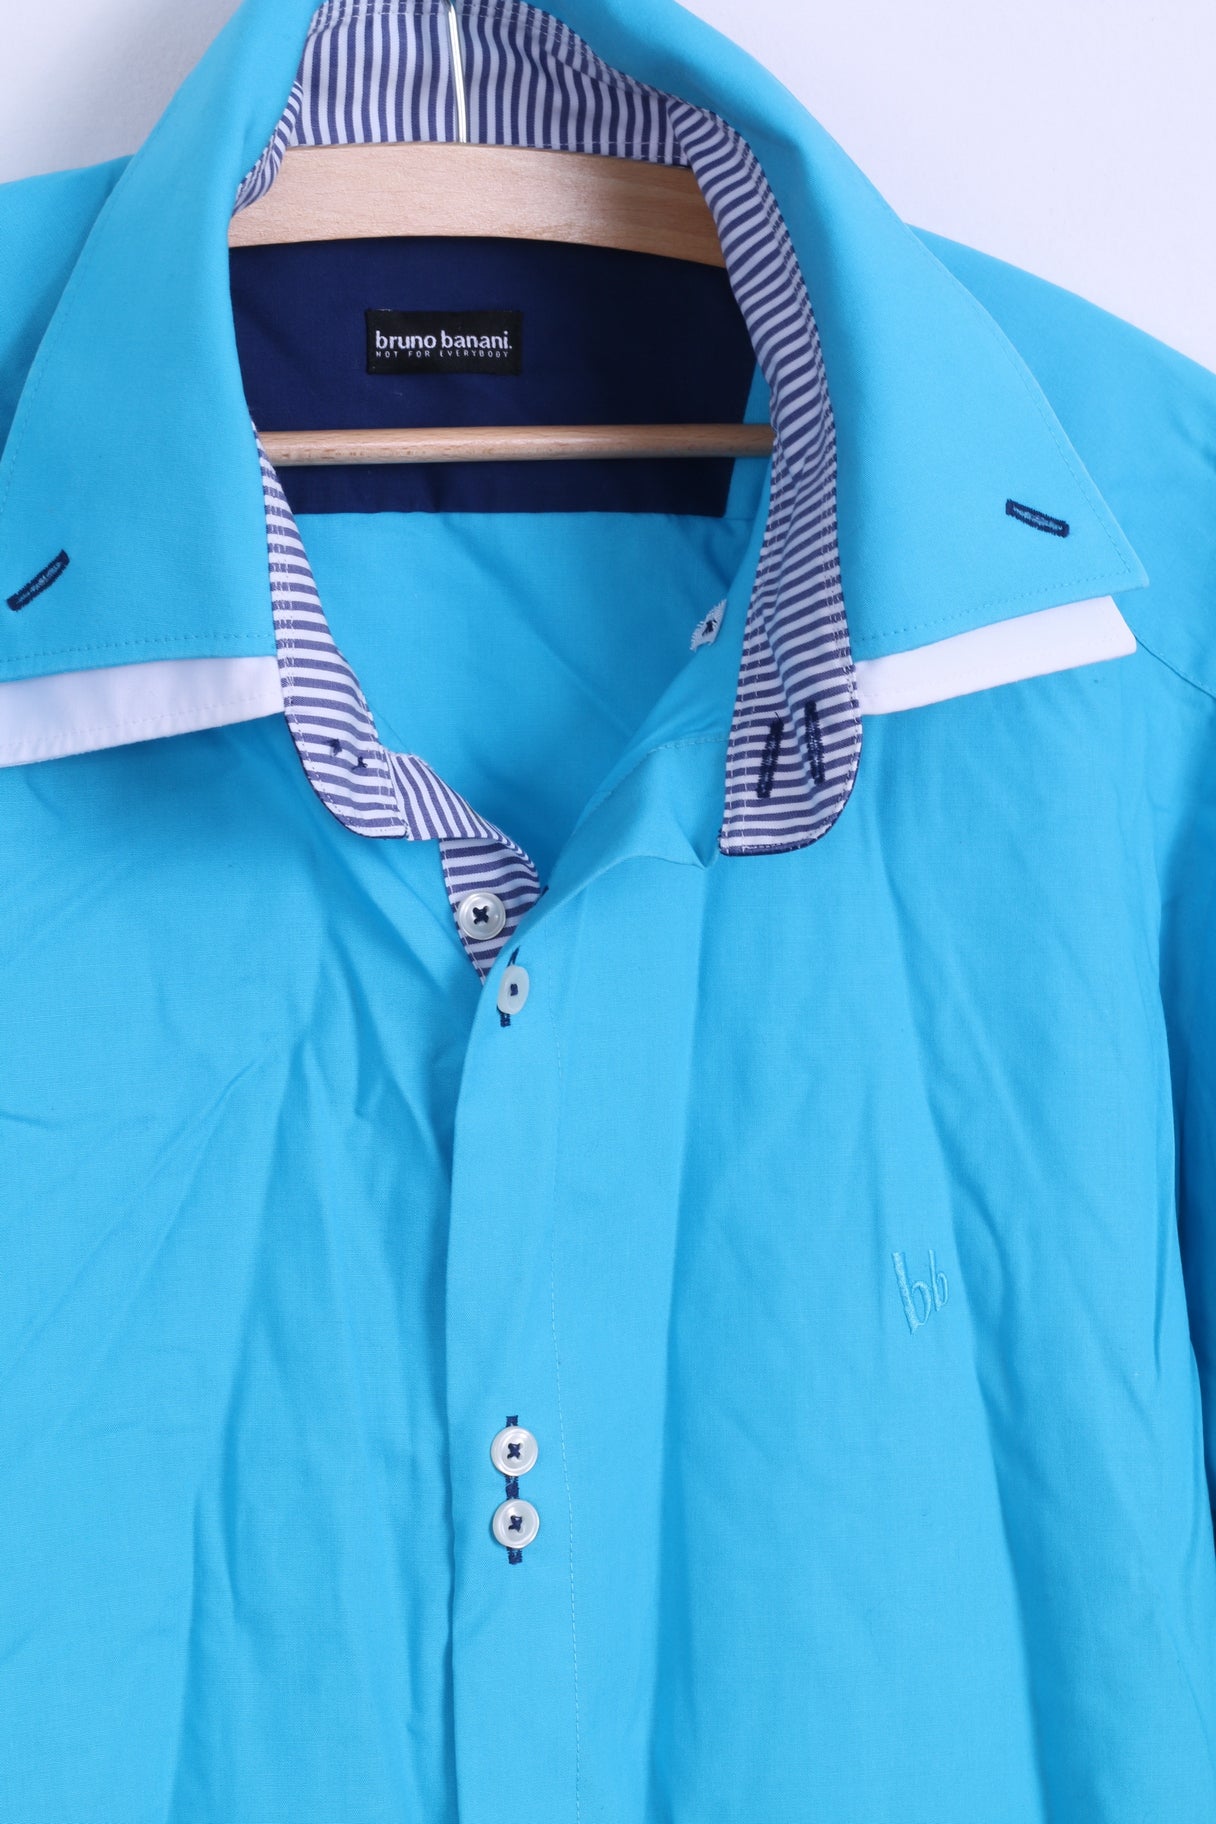 Bruno Banani Mens 43/44 L/XL Casual Long Sleeve Blue Retrospect Shirt – Clothes Cotton